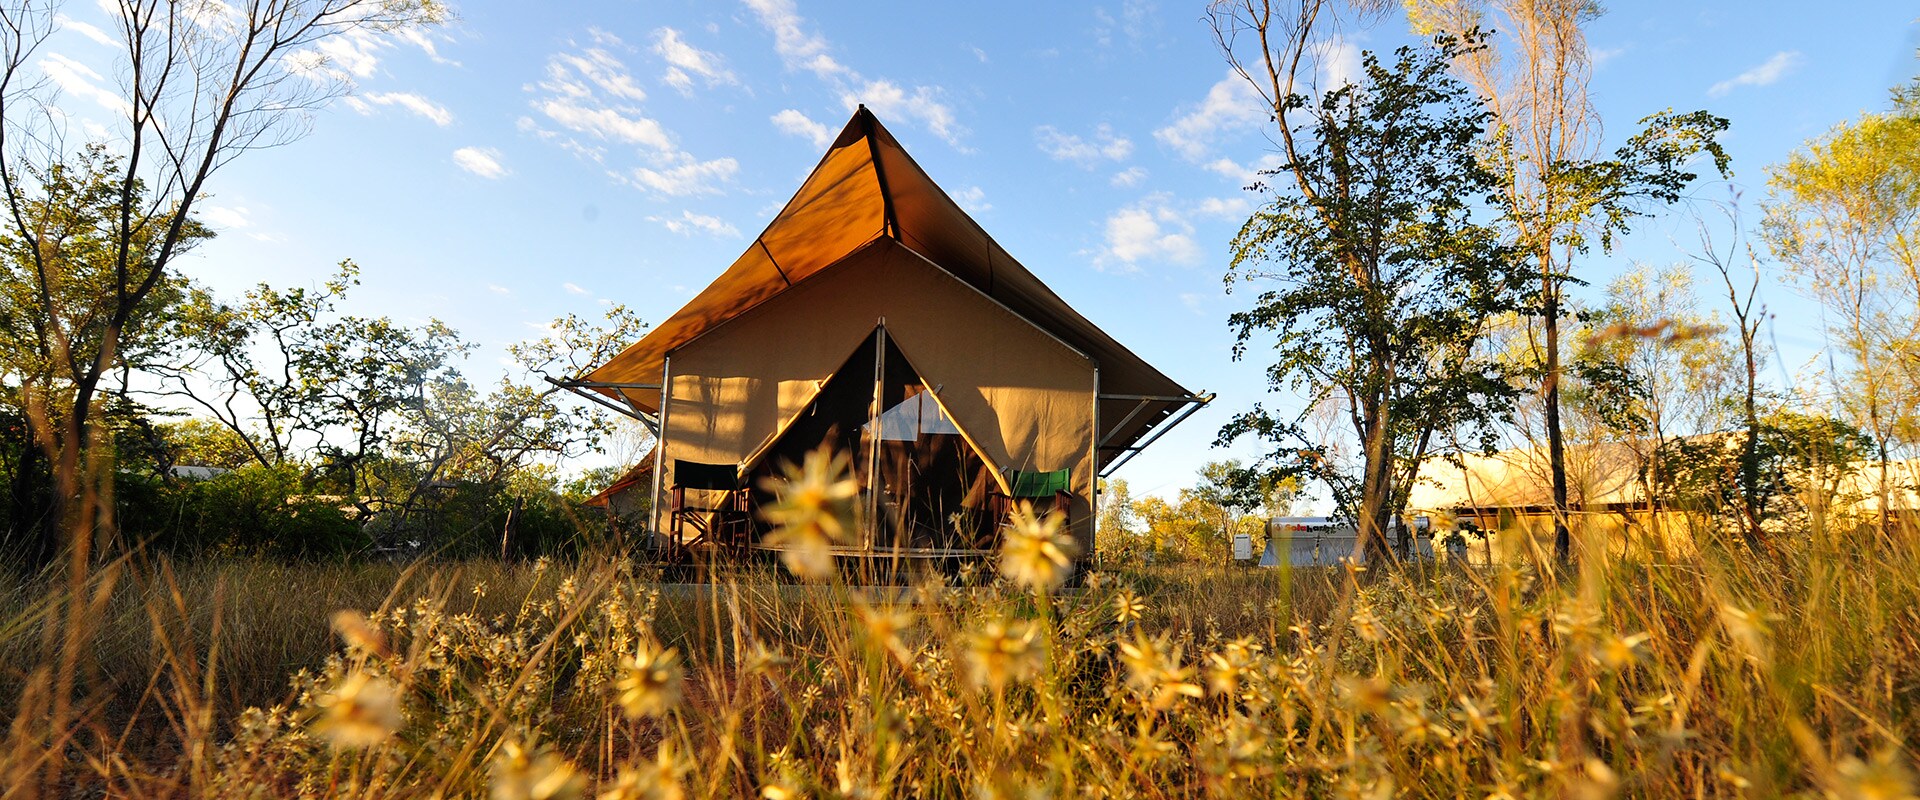 Bungle Bungle Wilderness Lodge tent exterior